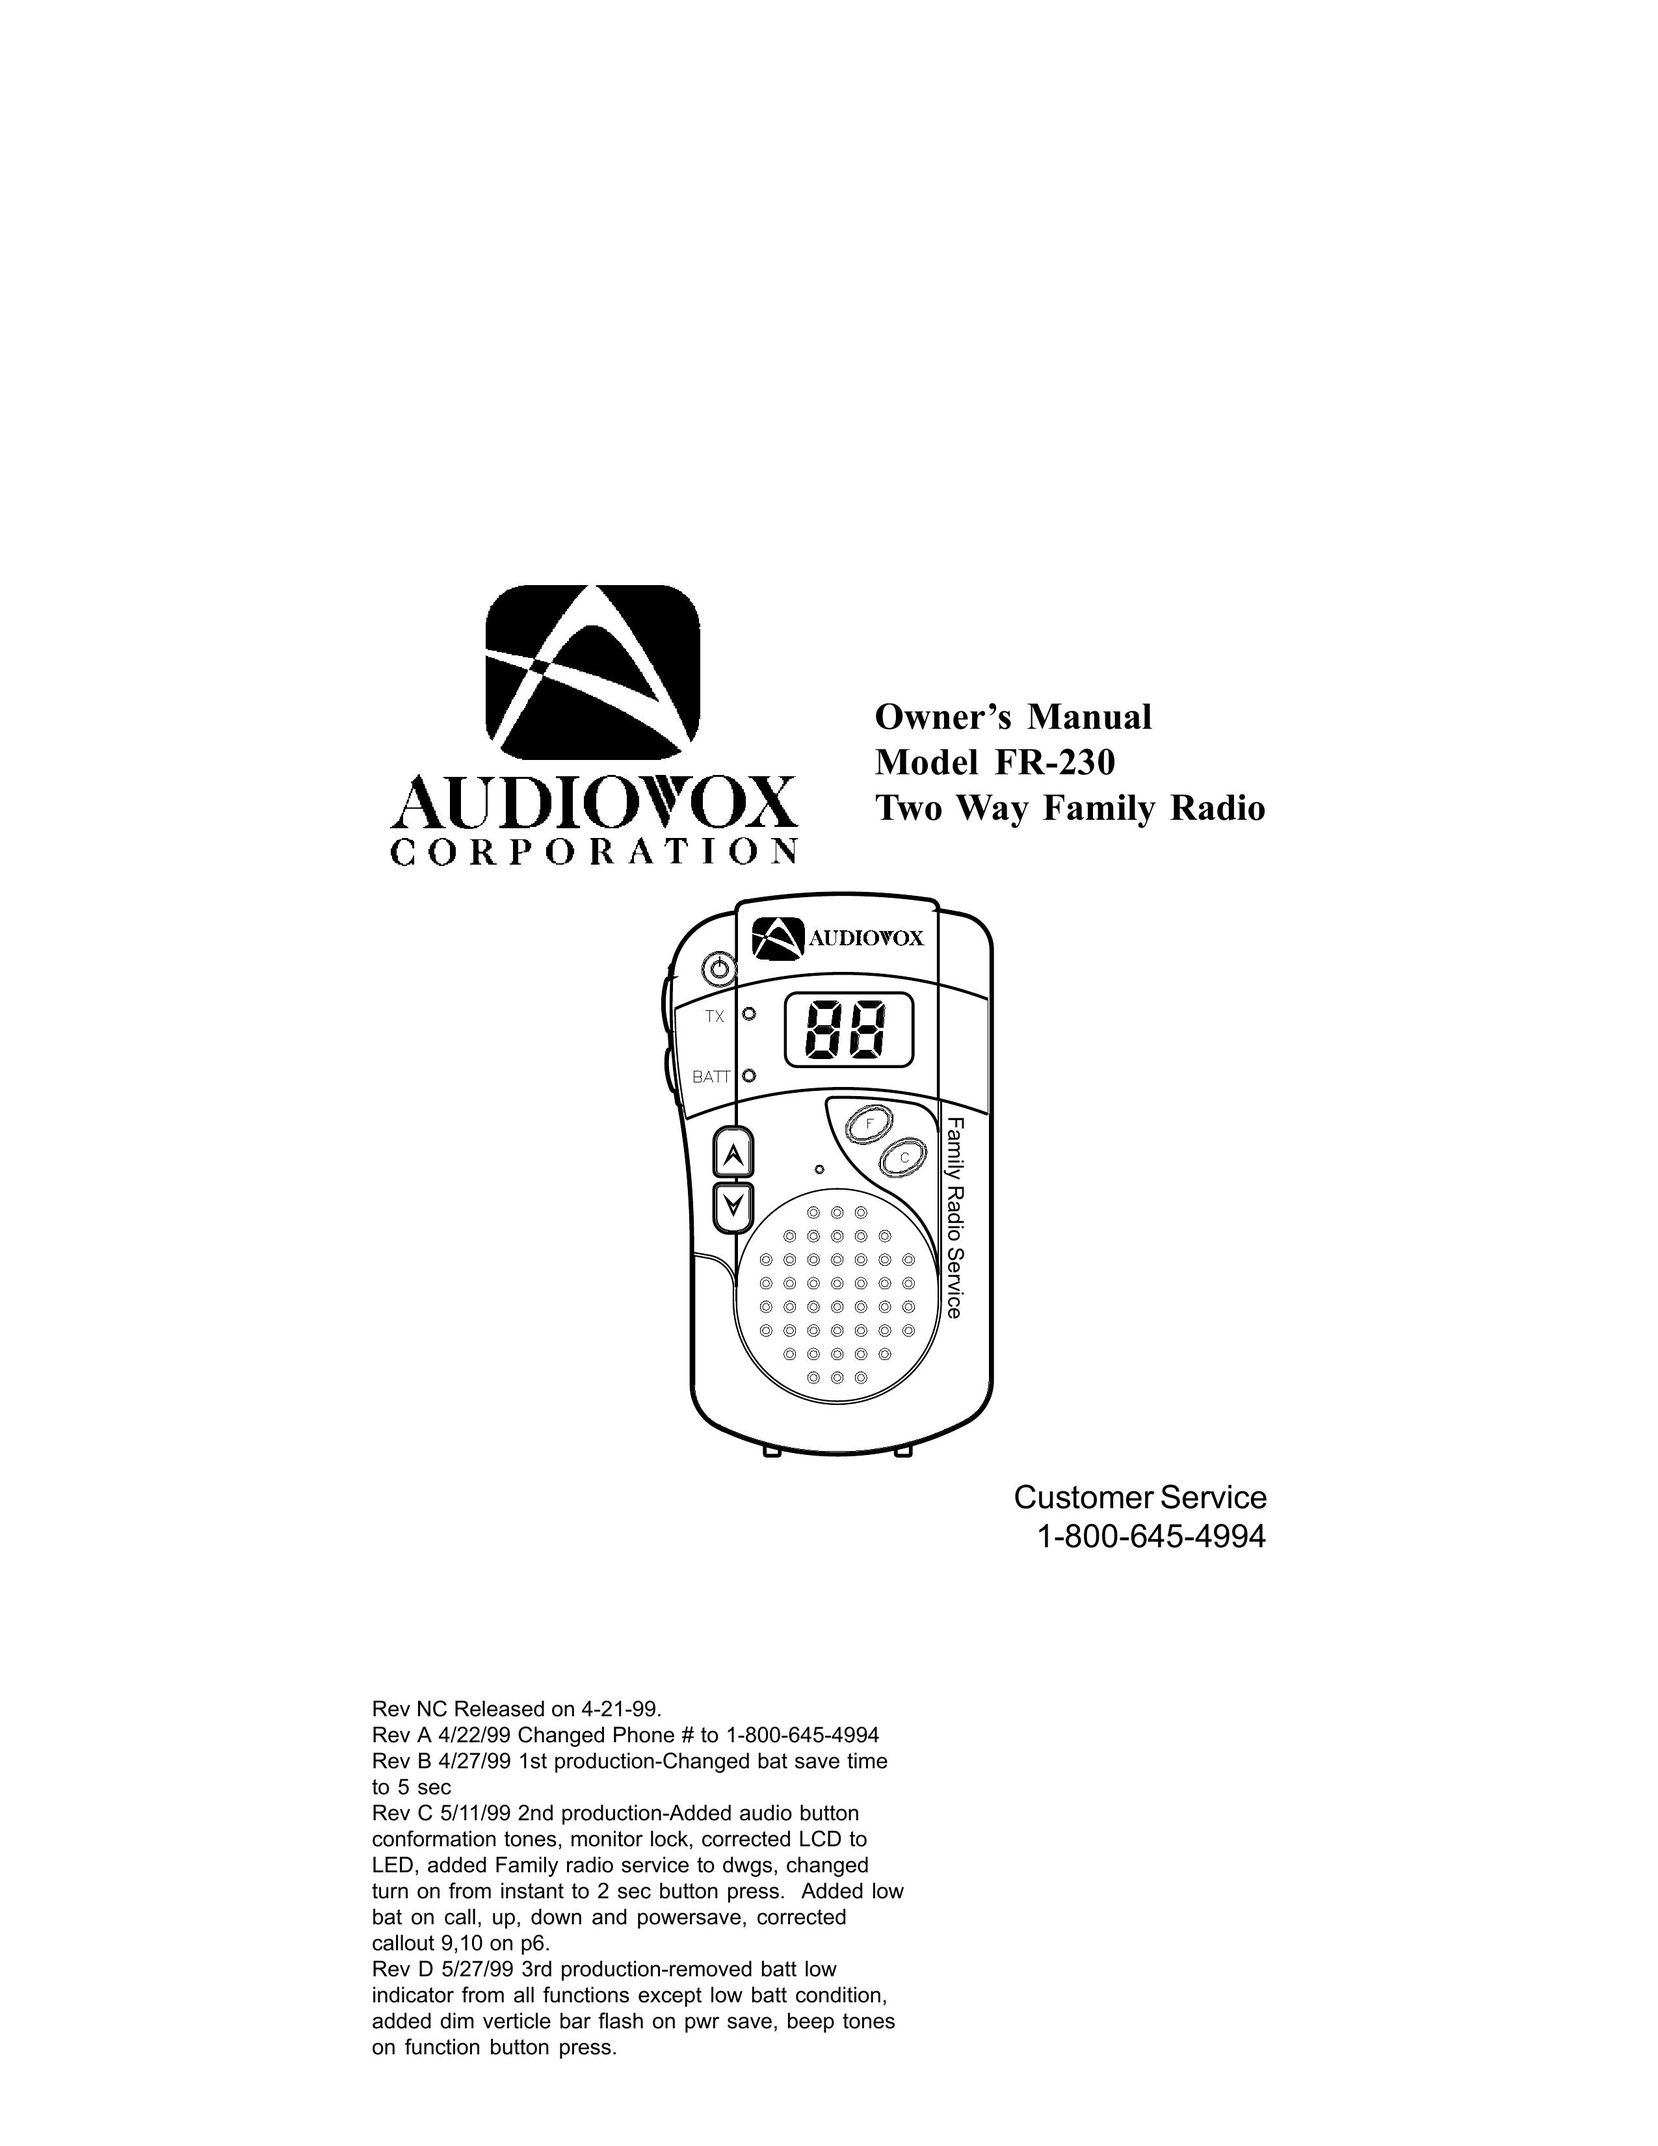 Audiovox FR-230 Two-Way Radio User Manual